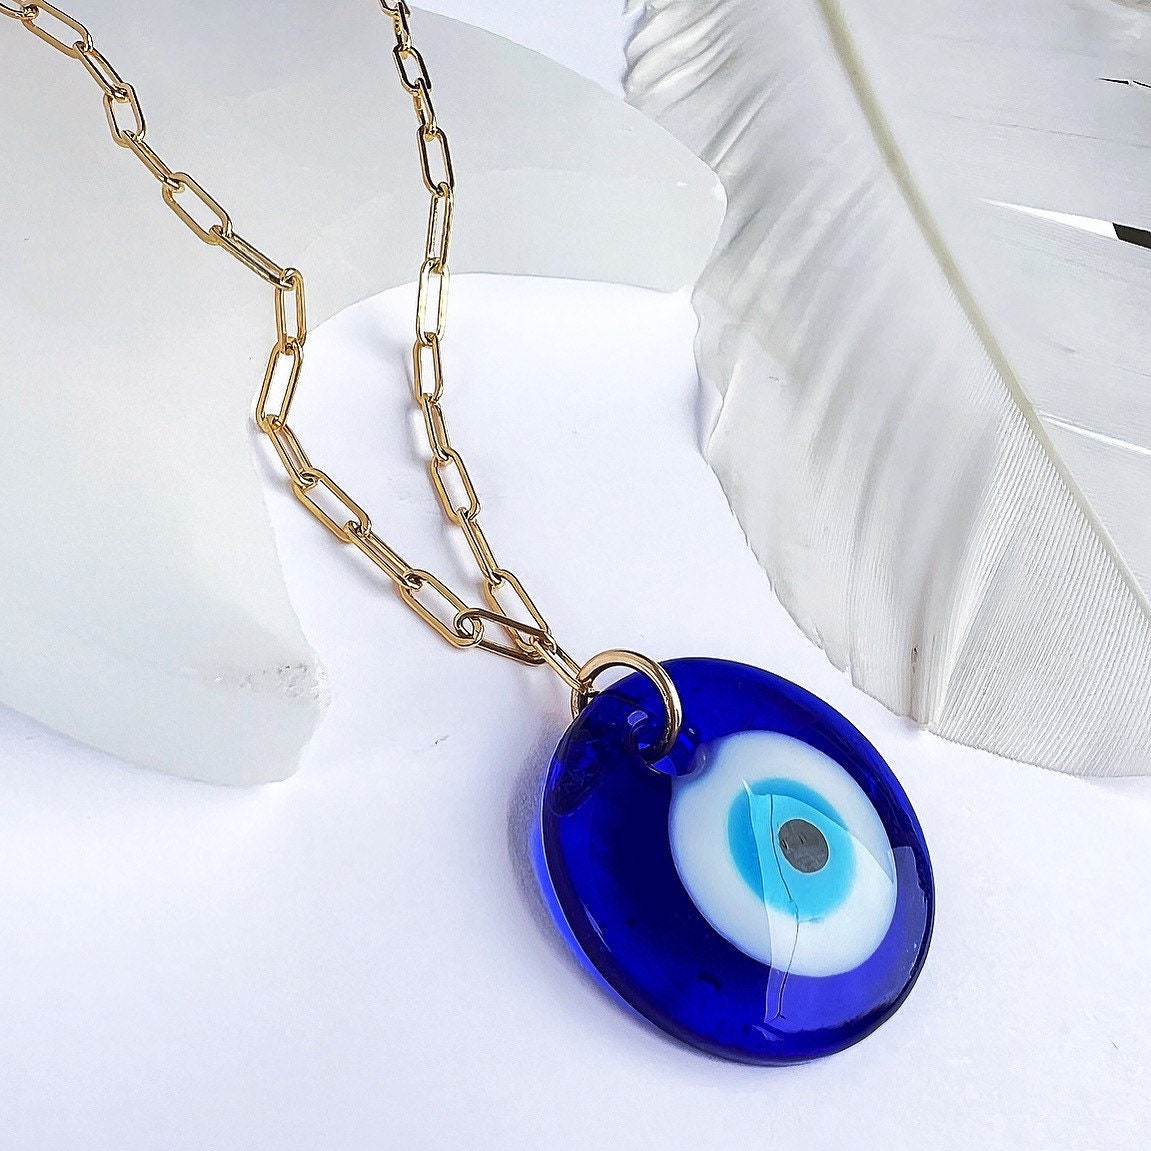 Large Evil Eye Necklace, Protection Charm Necklace, Glass Evil Eye Necklace, Turkish Glass Evil Eye Necklace, Blue Eye Pendant